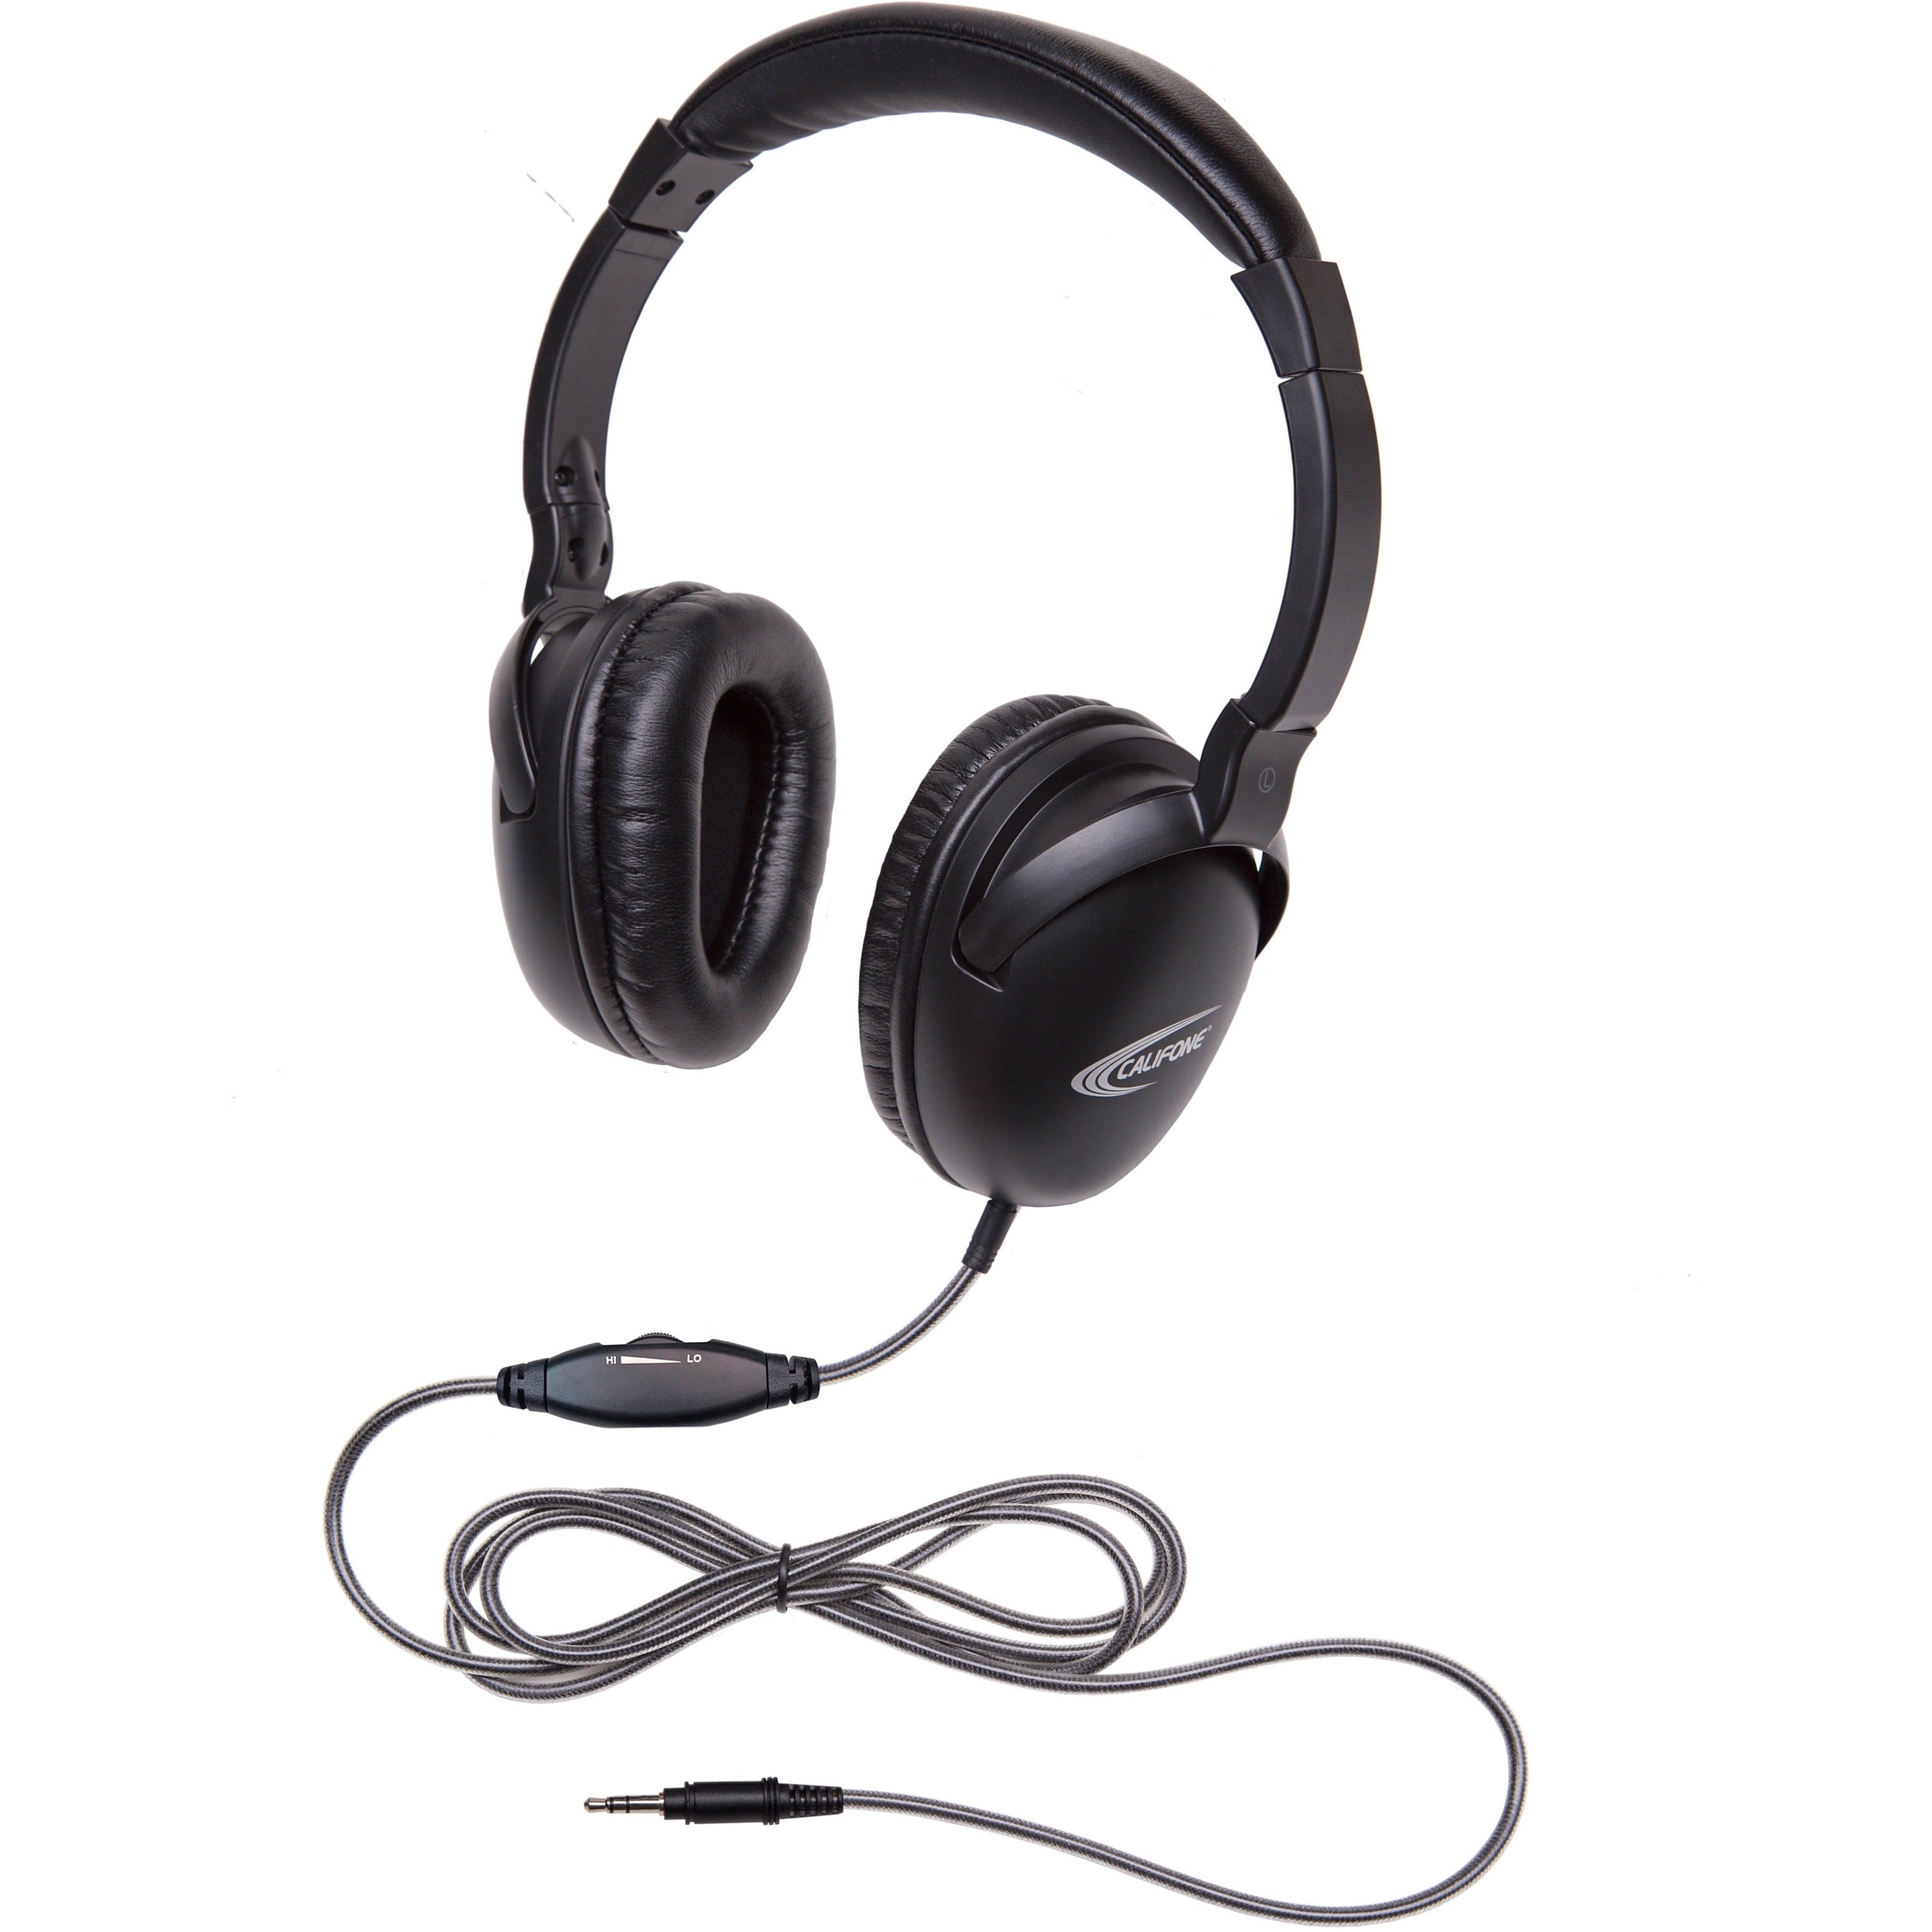 Califone 1017Av Neotech Plus Headphone With Calituff Braided Cord, 3.5Mm Plug, Inline Volume Control - Stereo - Matte Black - Mini-phone (3.5mm) - Wired - 32 Ohm - 20 Hz 20 kHz - Gold Plated Connector - Over-the-head - Binaural - Circumaural - 6 ft C - 1